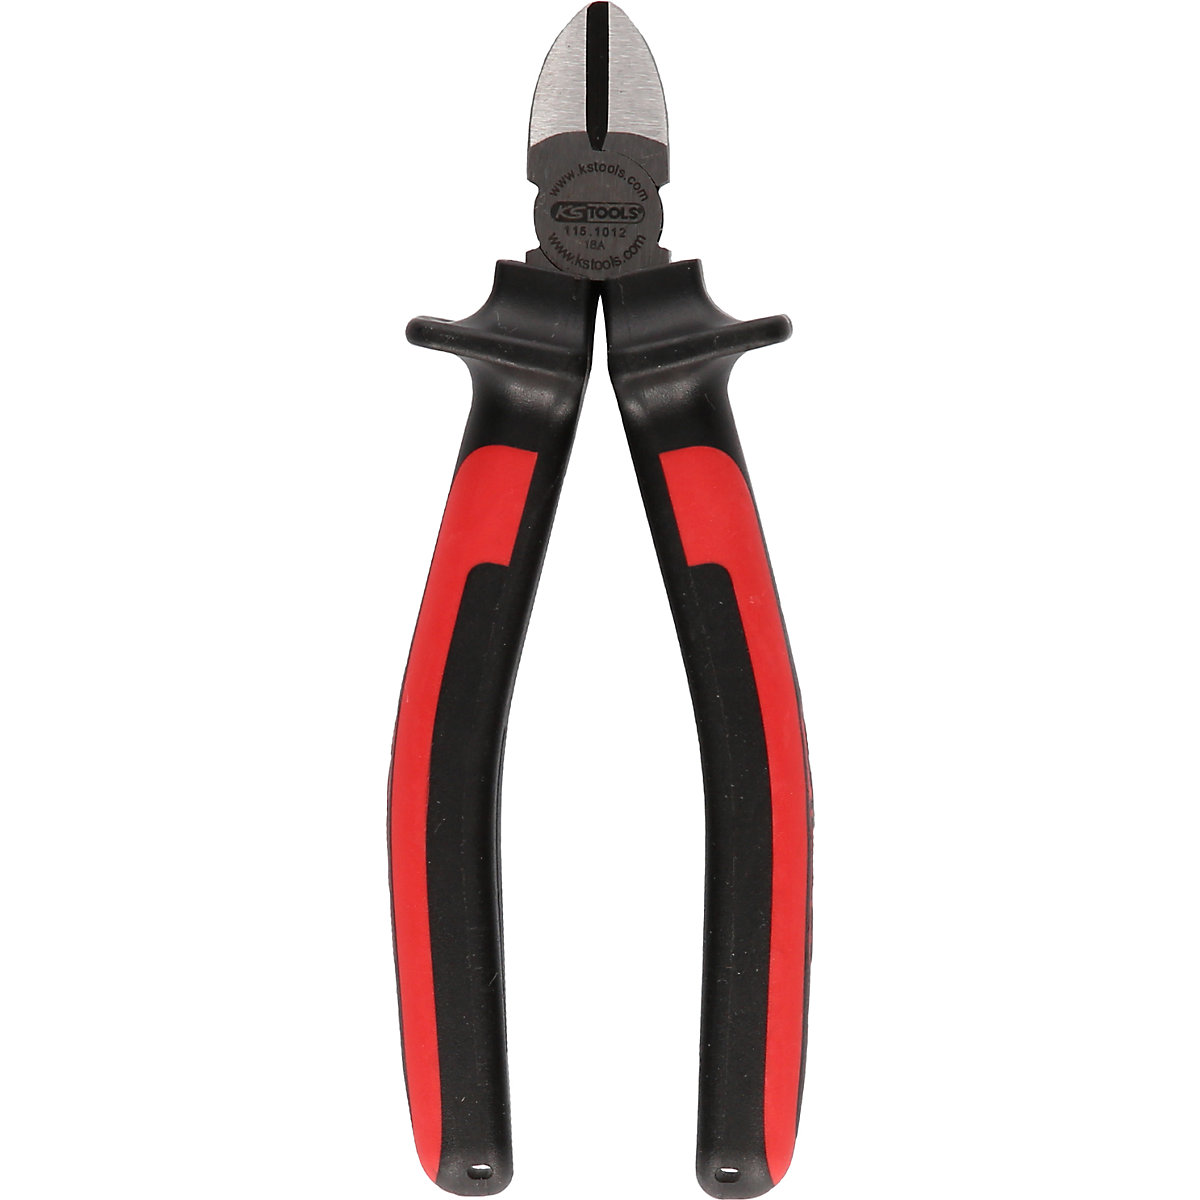 Tronchese a tagliente laterale diagonale ERGOTORQUE – KS Tools